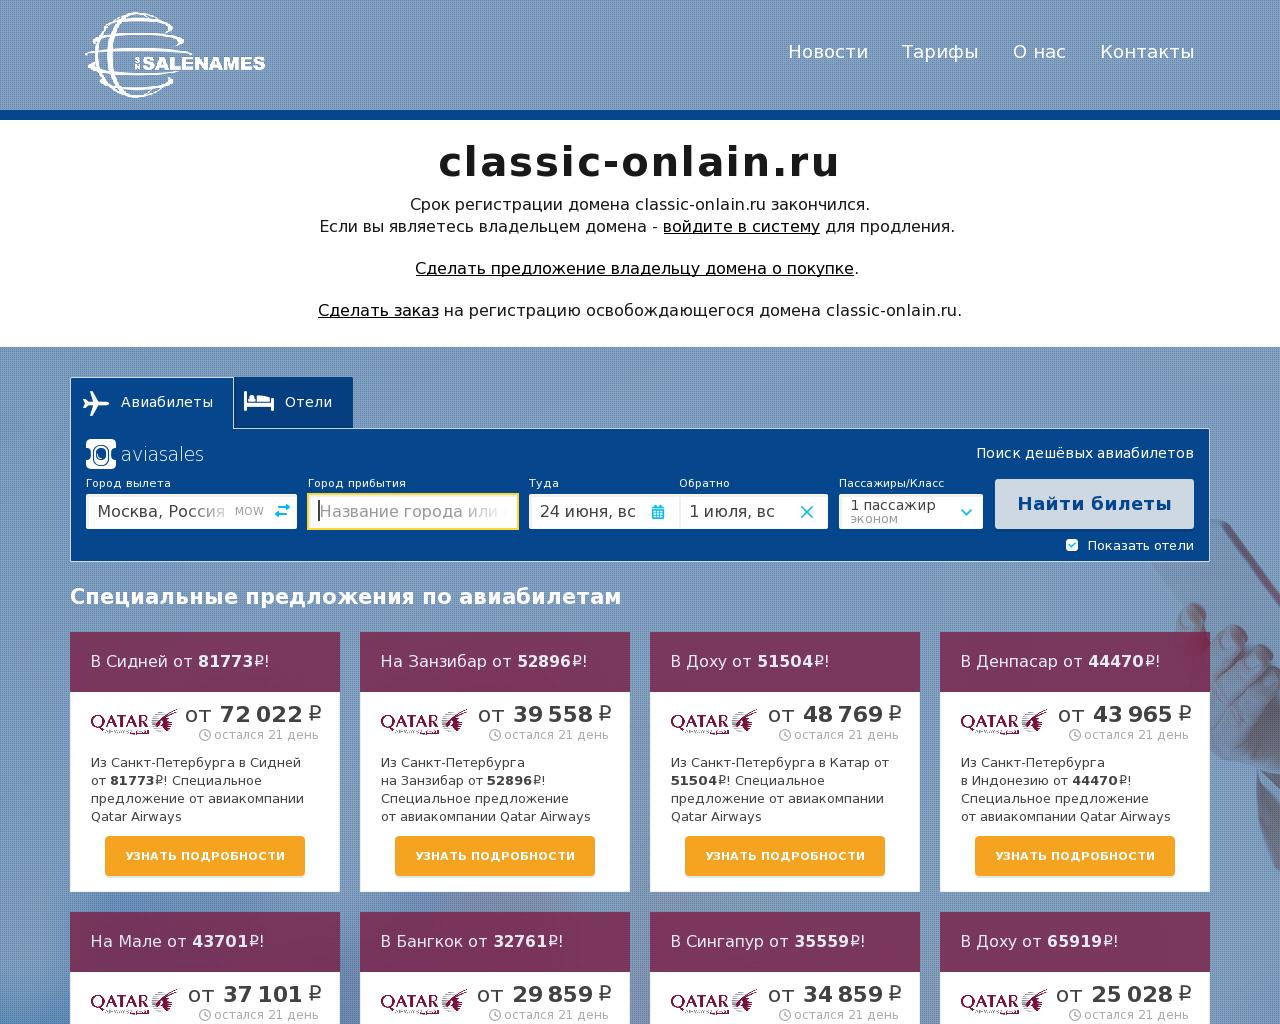 Изображение сайта classic-onlain.ru в разрешении 1280x1024